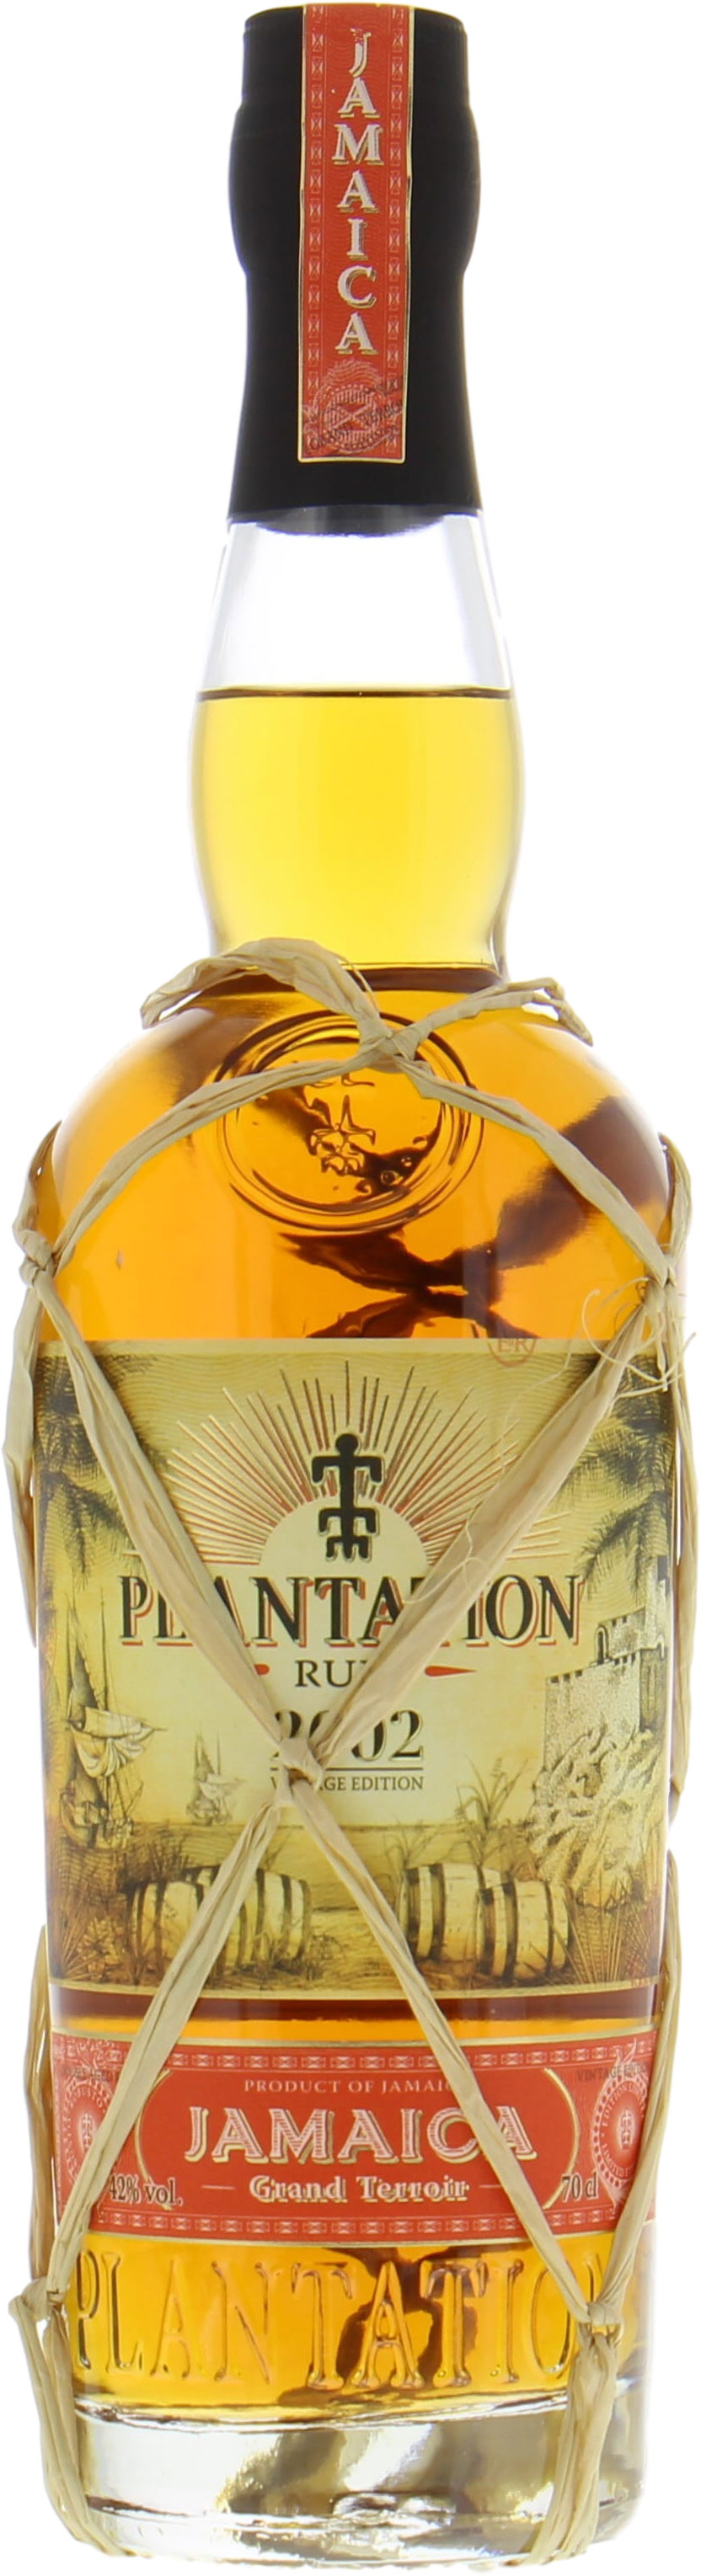 Plantation Rum - Jamaica 14 Years Old Vintage Edition 2002 42% 2002 NO OC